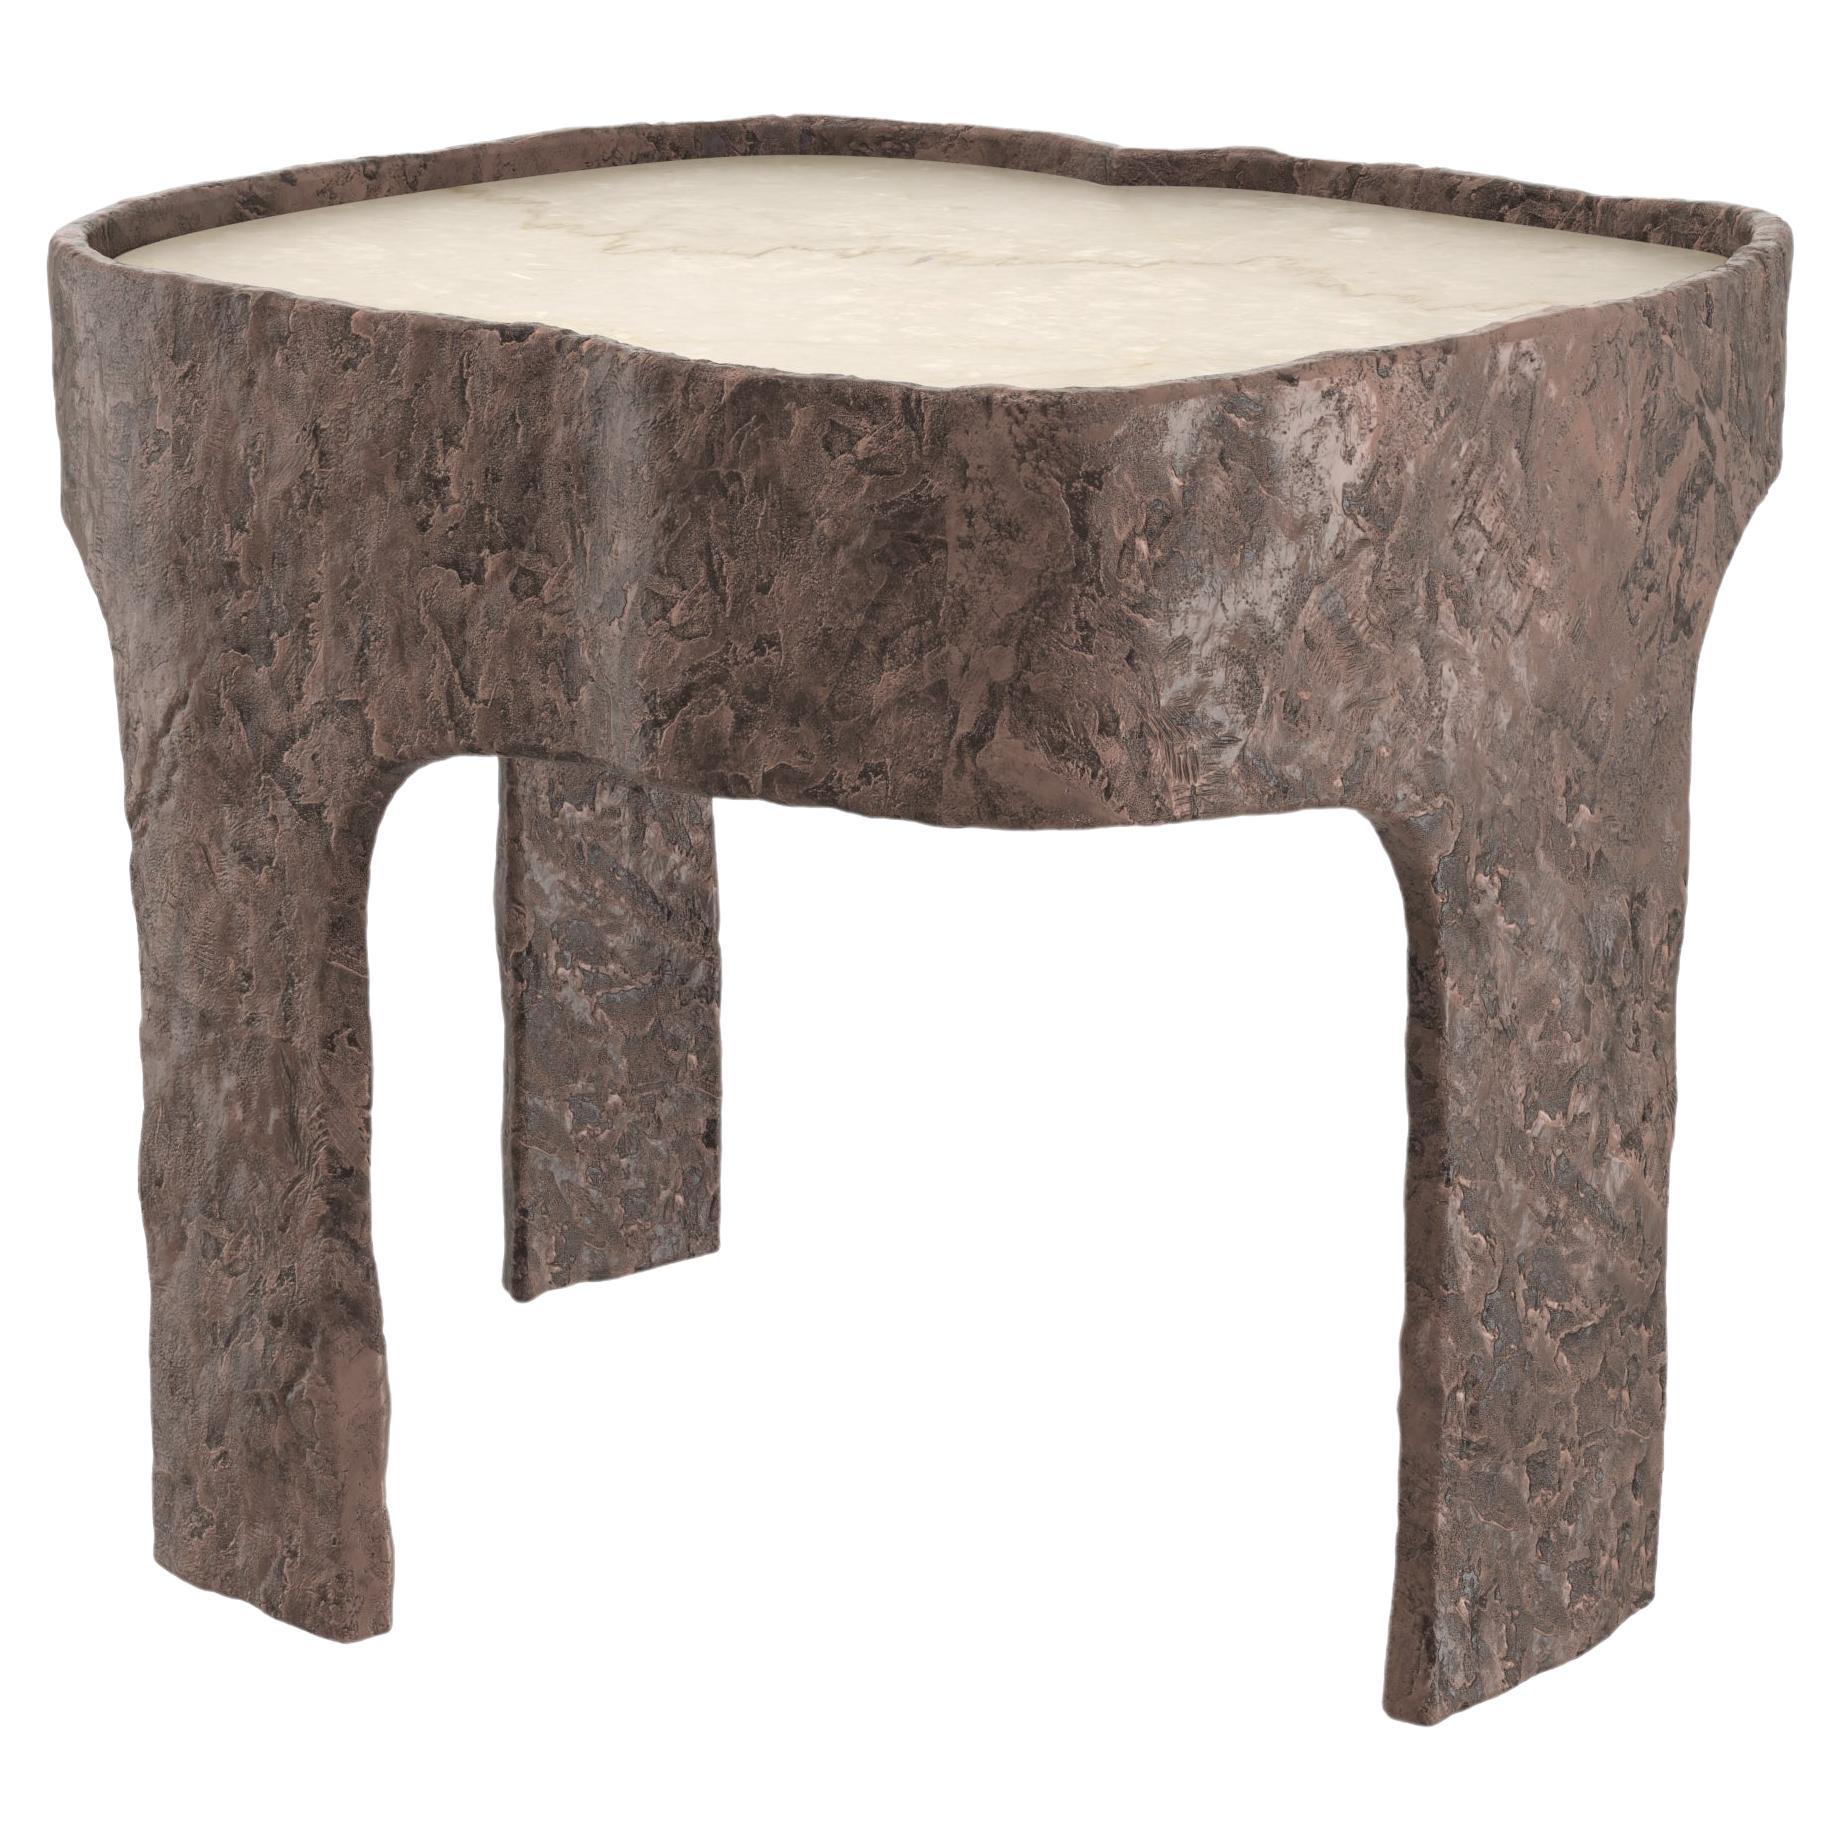 Limited Edition Marble Bronze Table, Sumatra V1 by Edizione Limitata For Sale